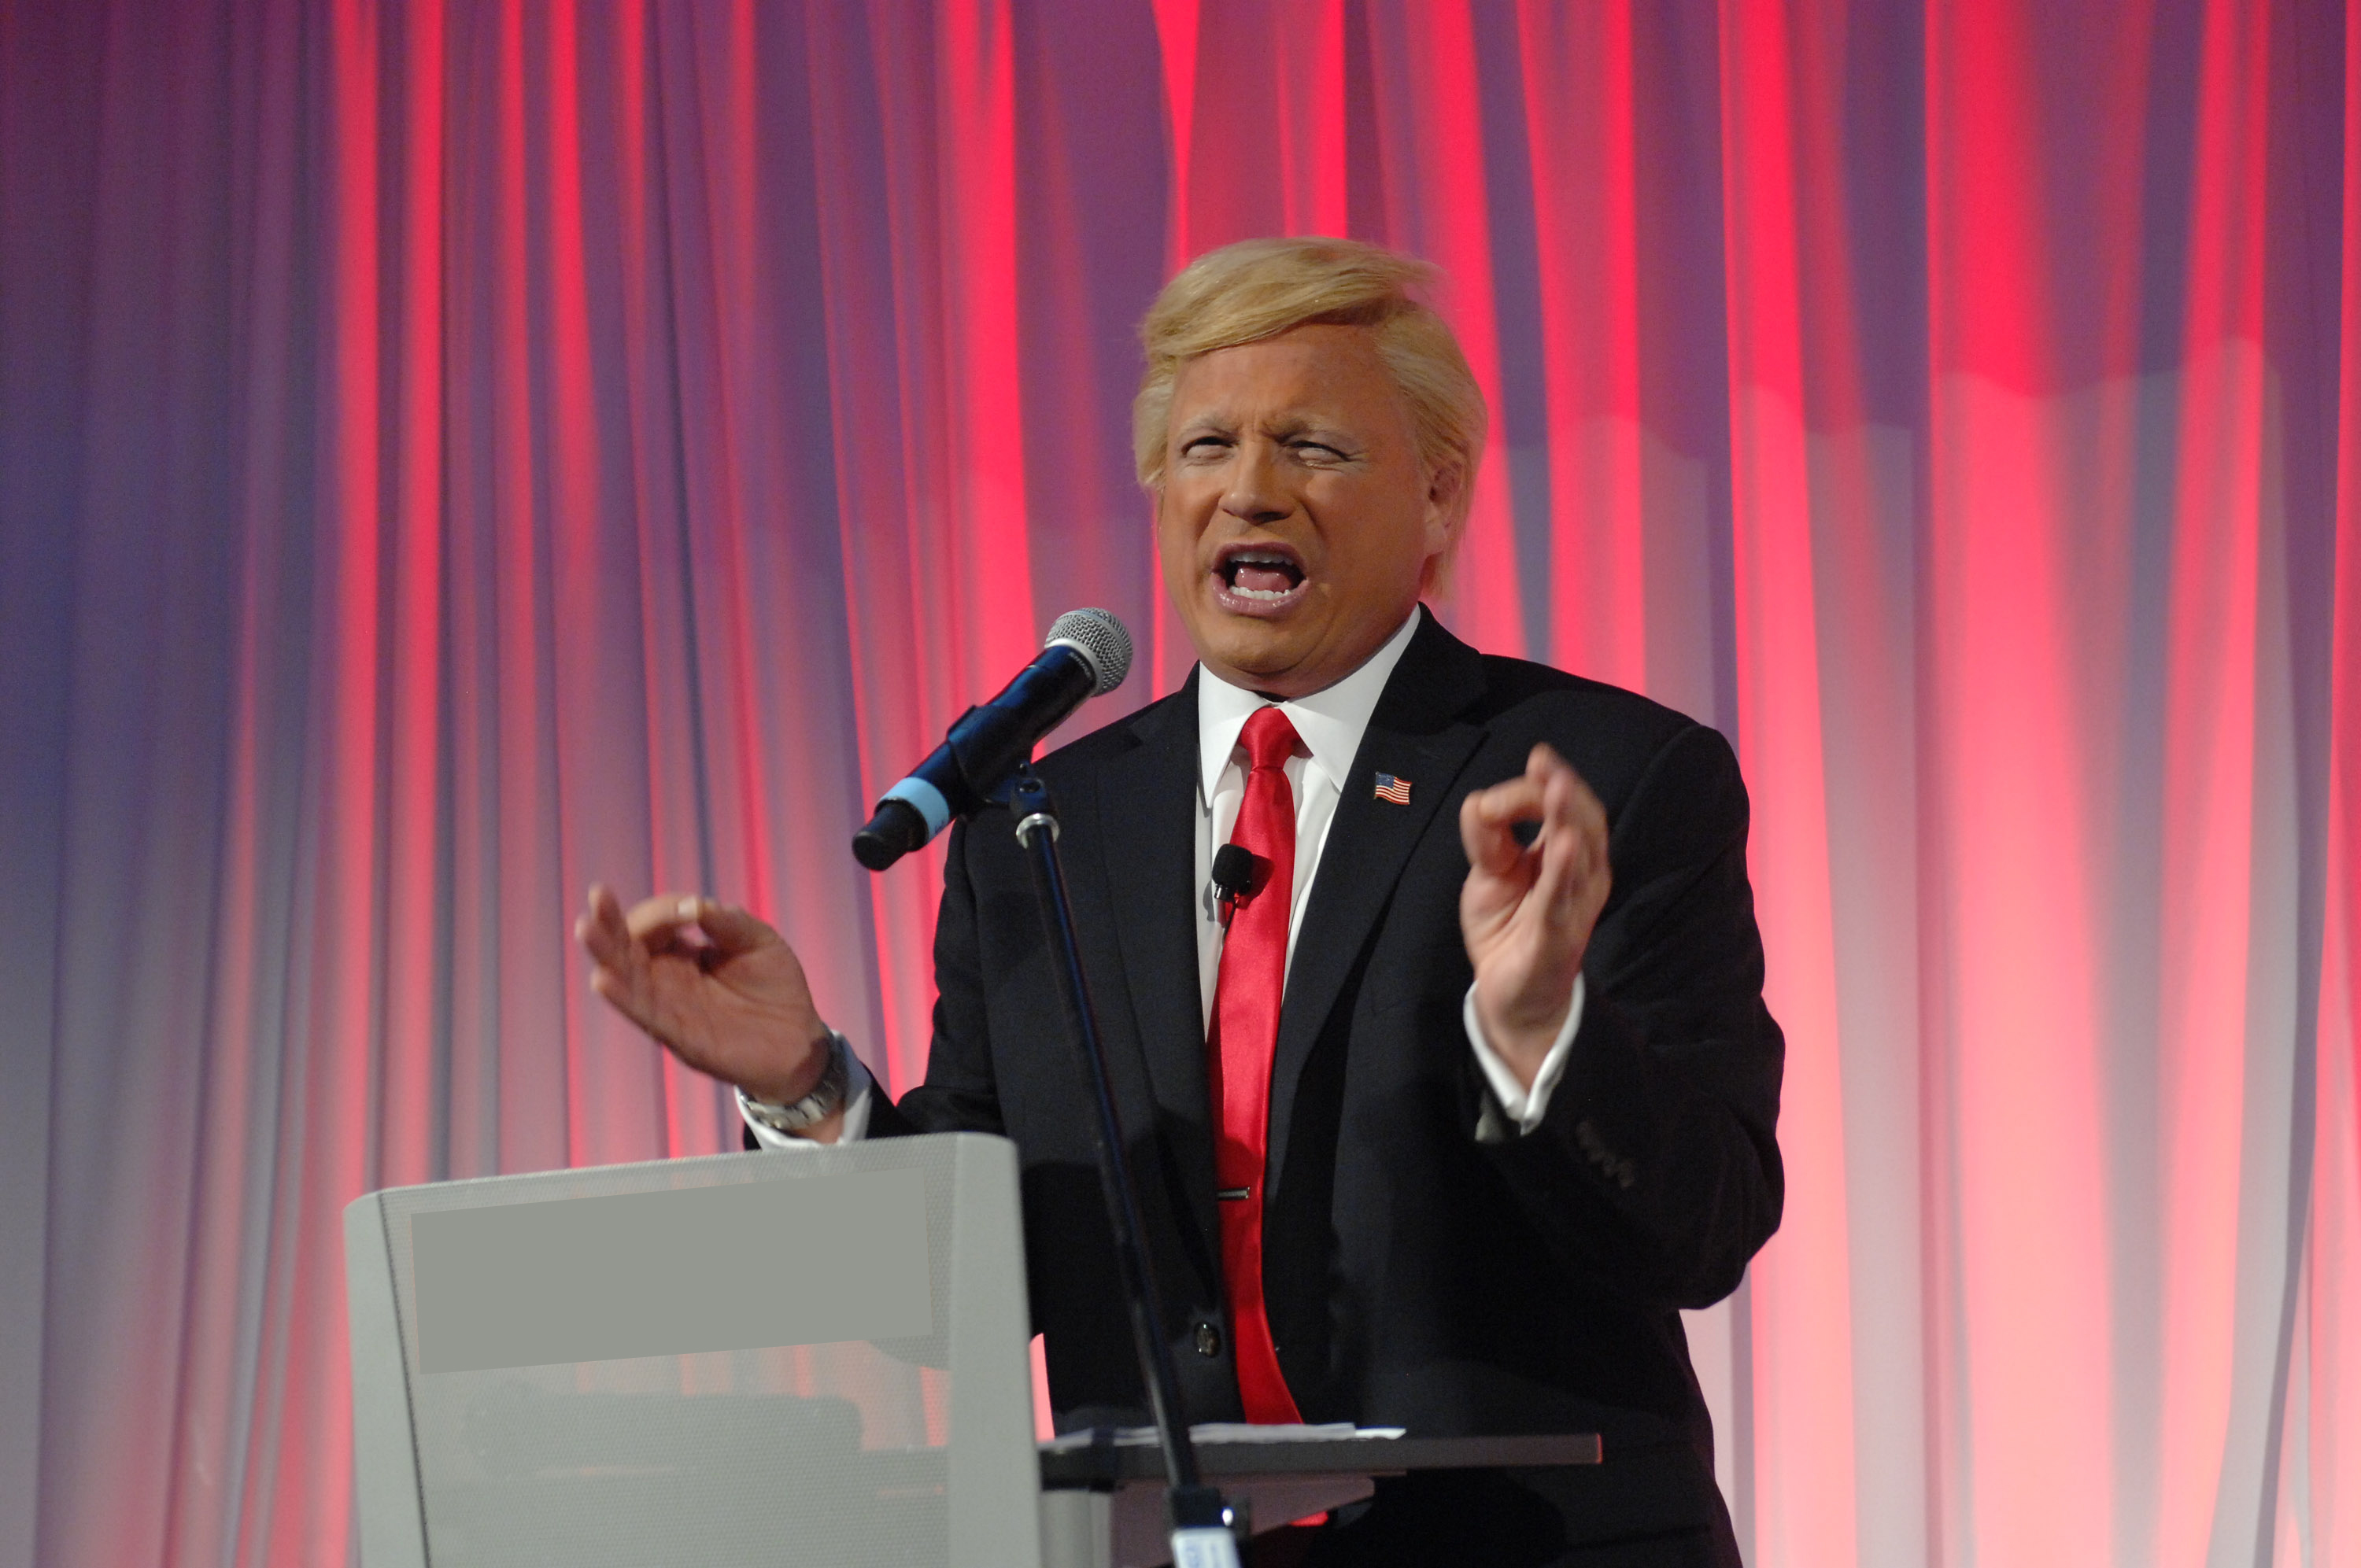 Actor/impersonator John Di Domenico has fun portraying Donald Trump